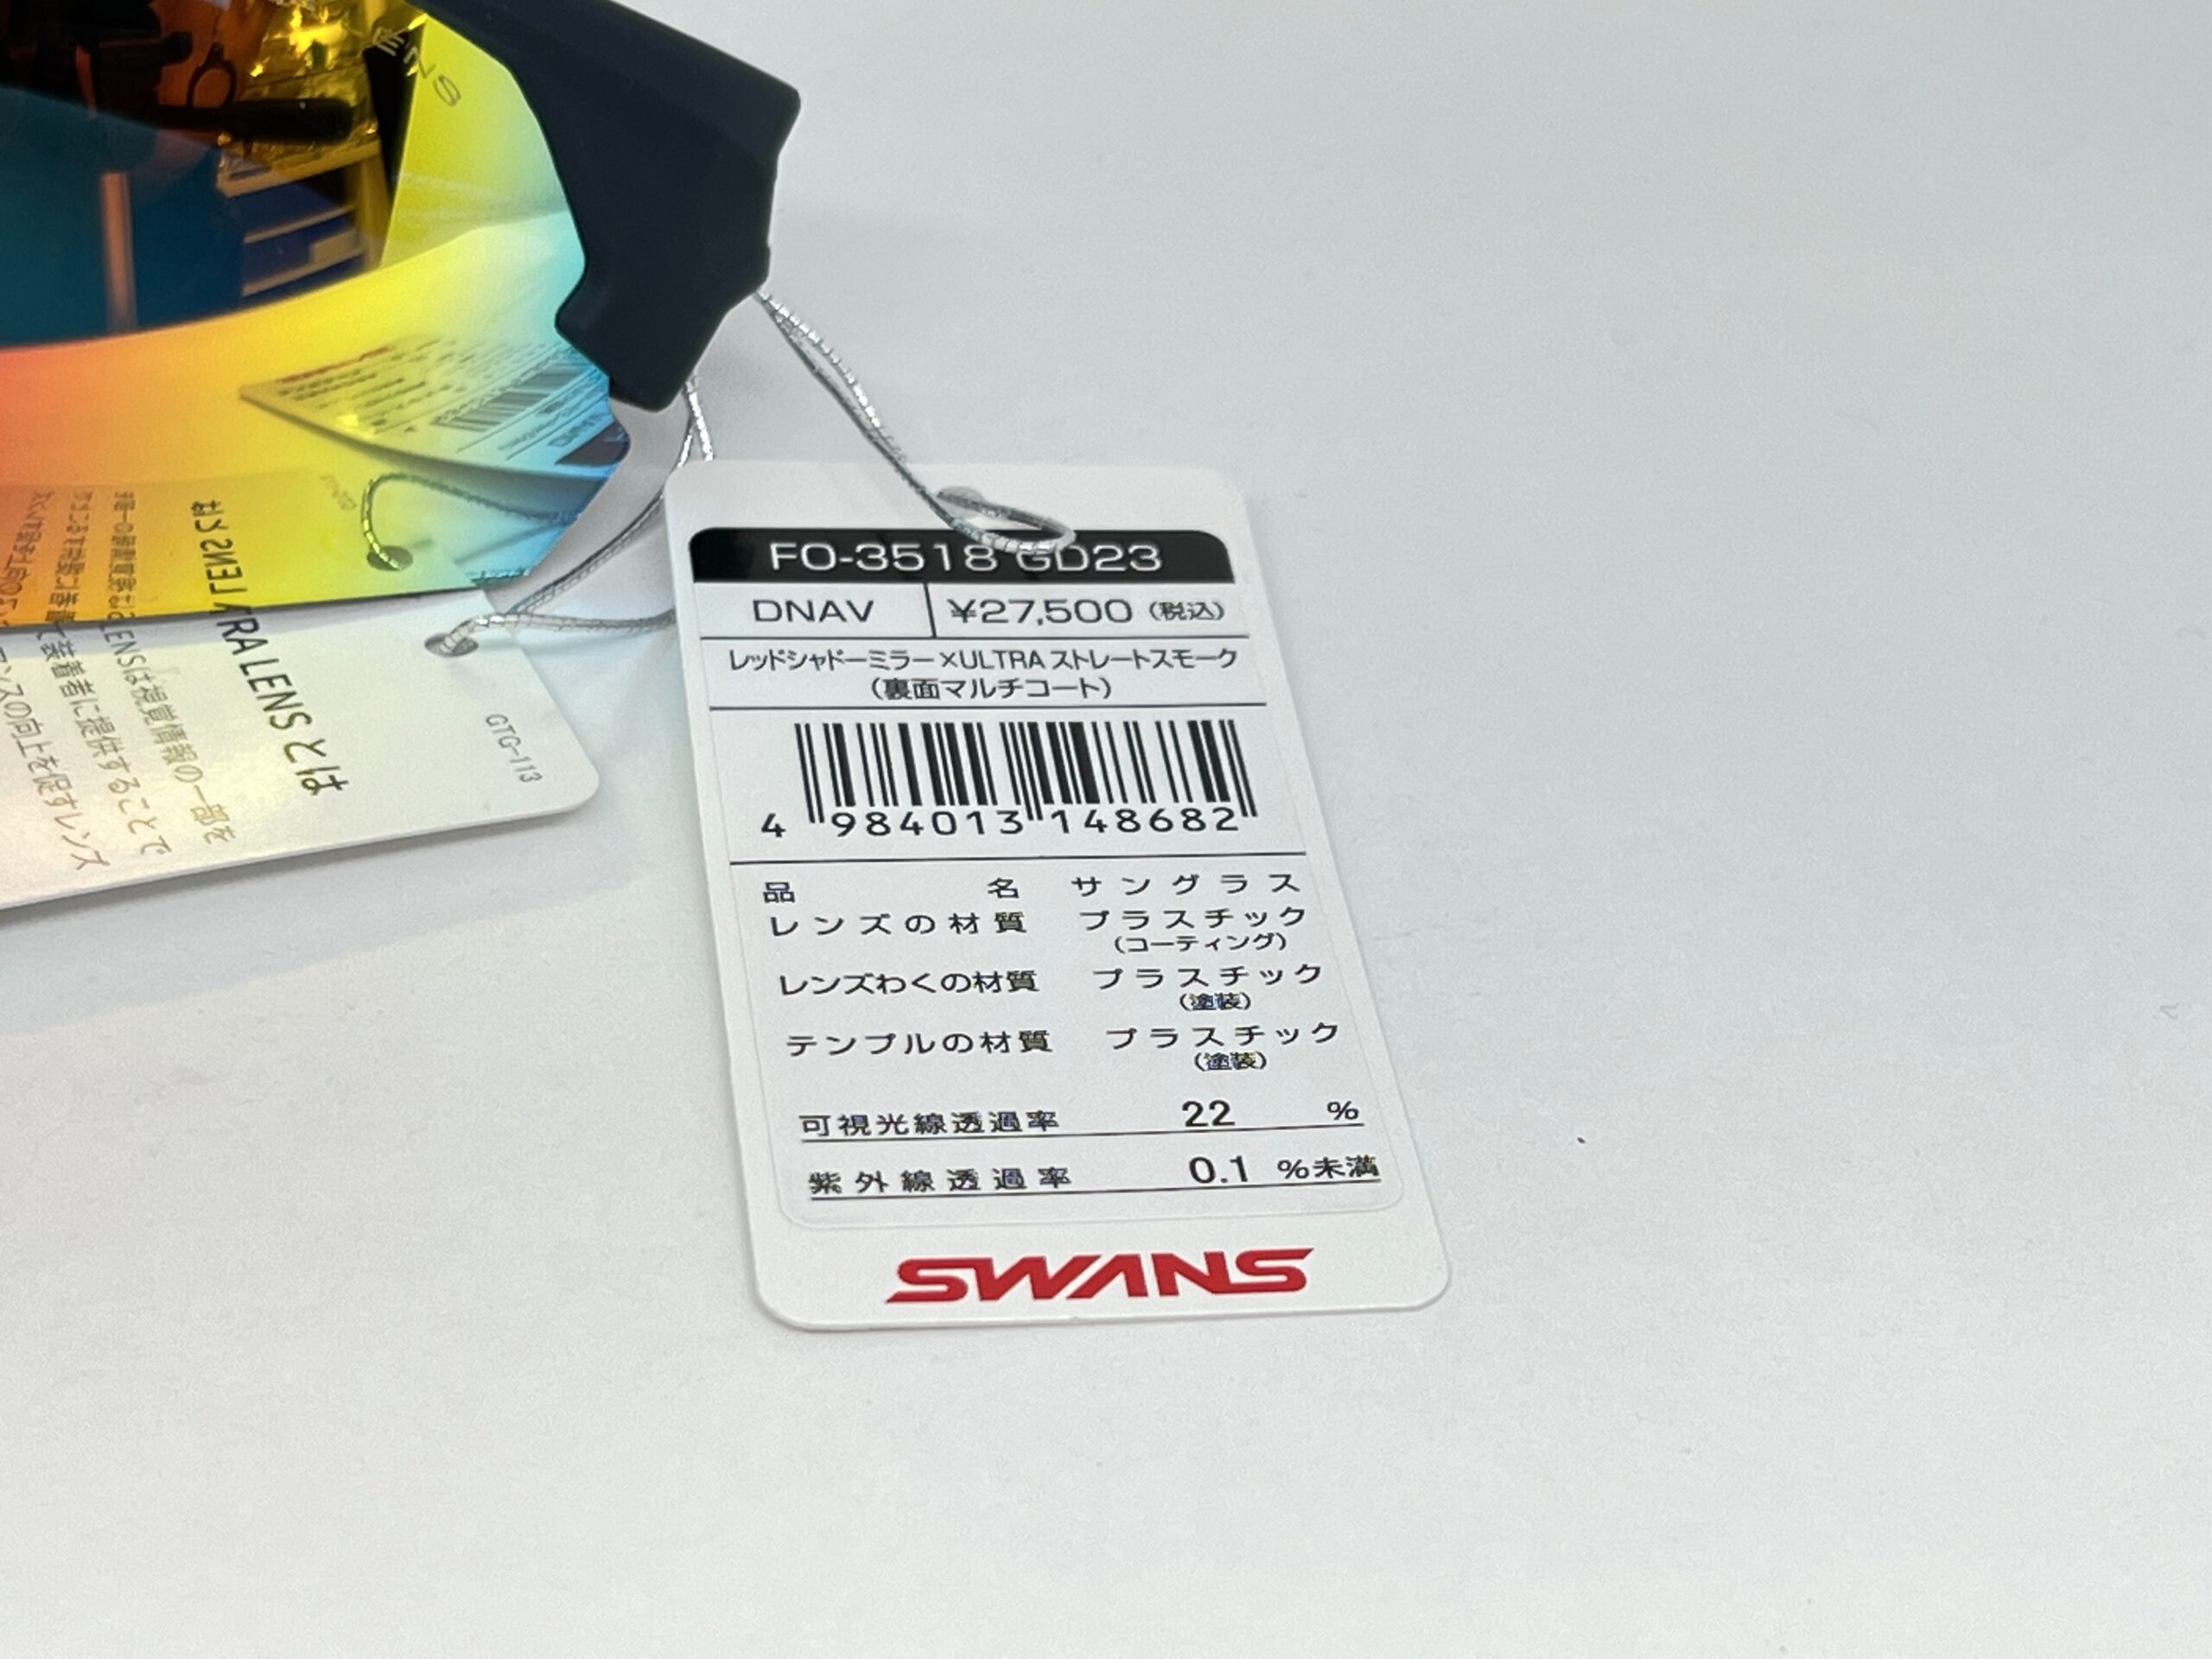 SWANS FO-3518 GD23 GENDA SOSUKE Signature Modelスライド09